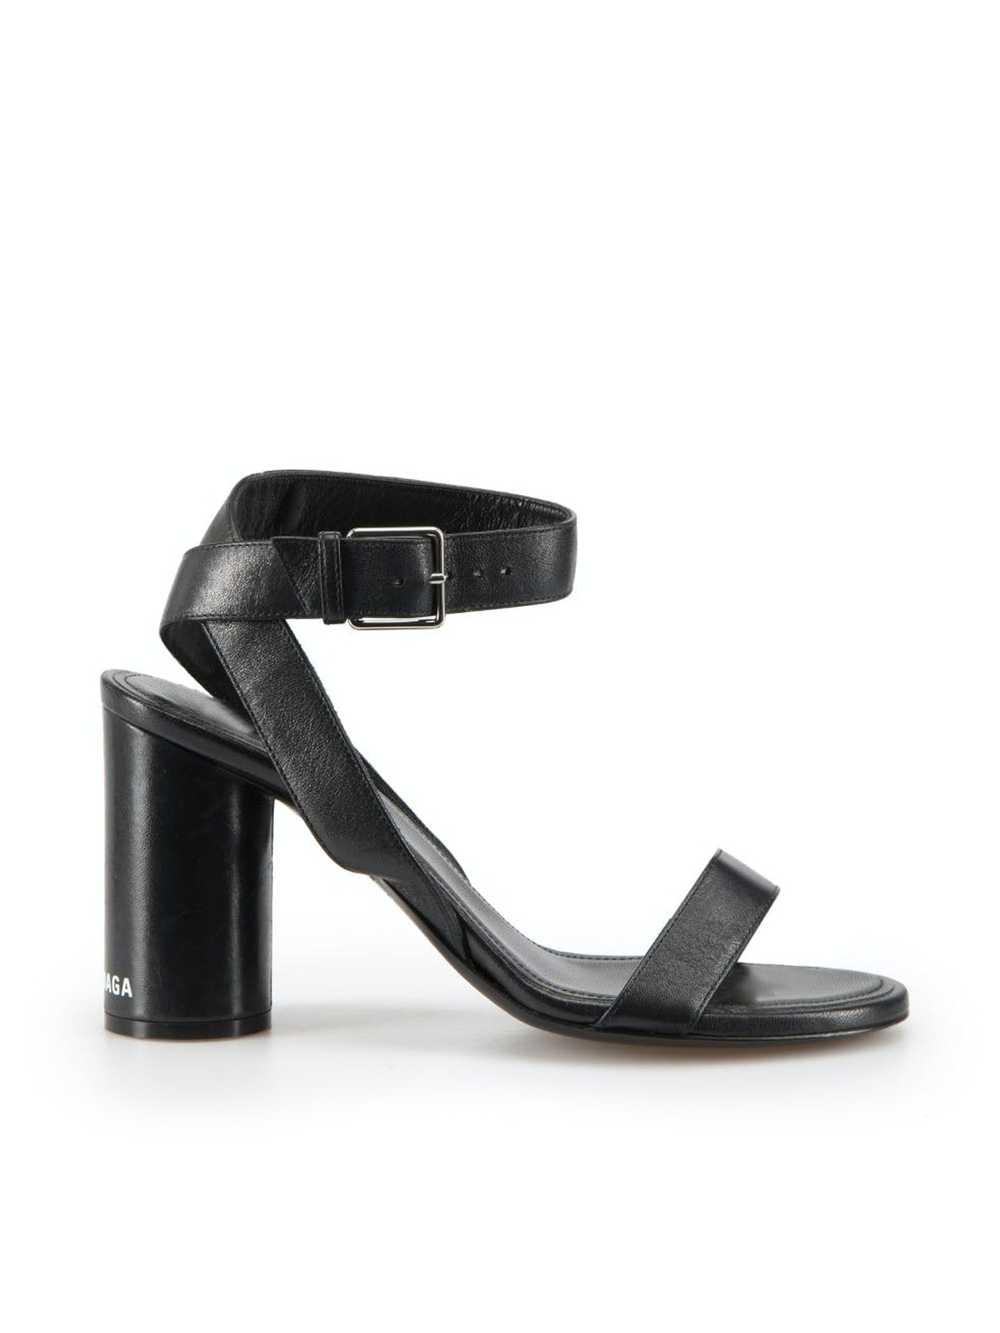 Balenciaga Black Leather Strappy Mid Heel Sandals - image 1